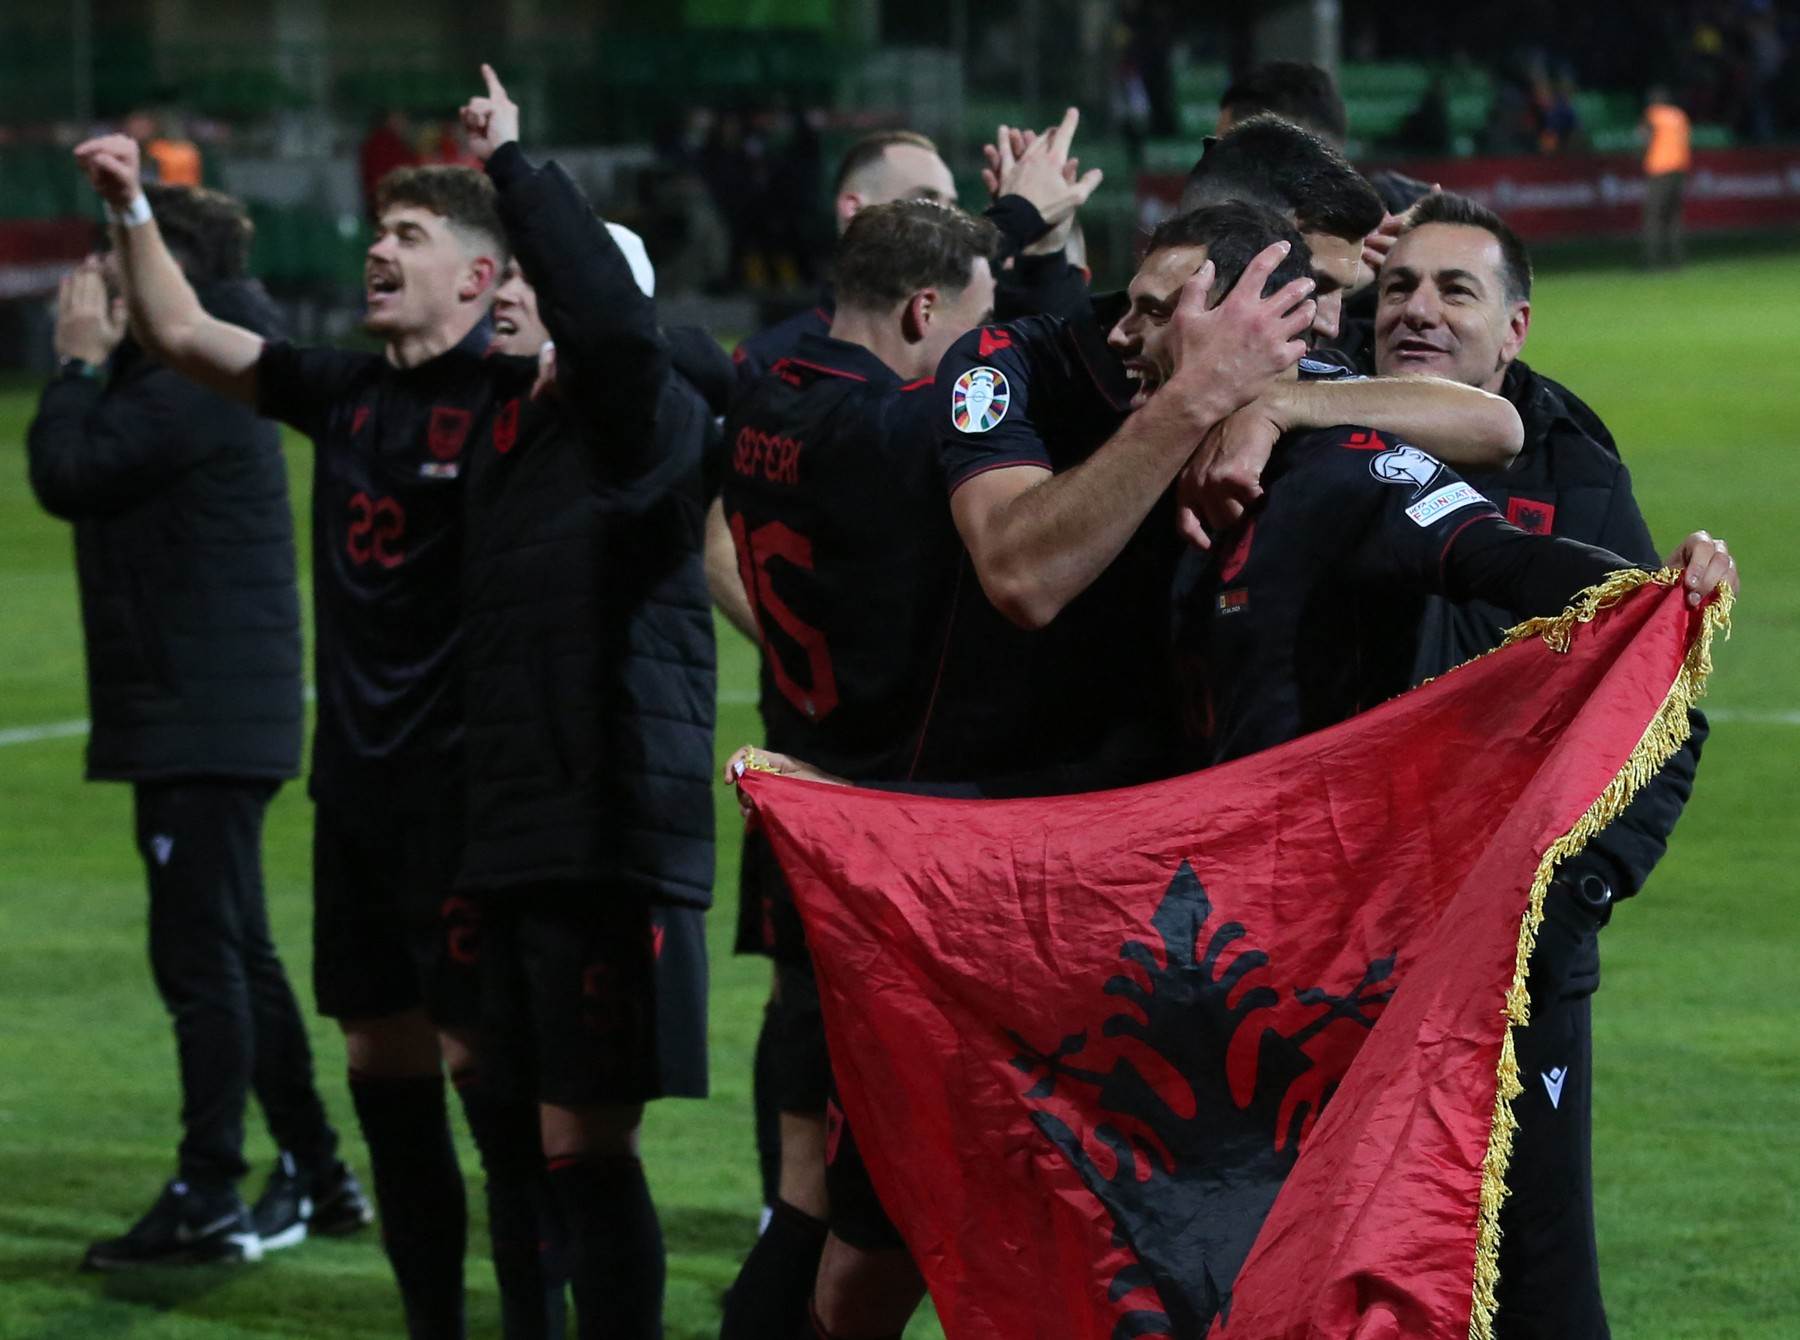  Albanski fudbaler obukao duks Adem Jasari 